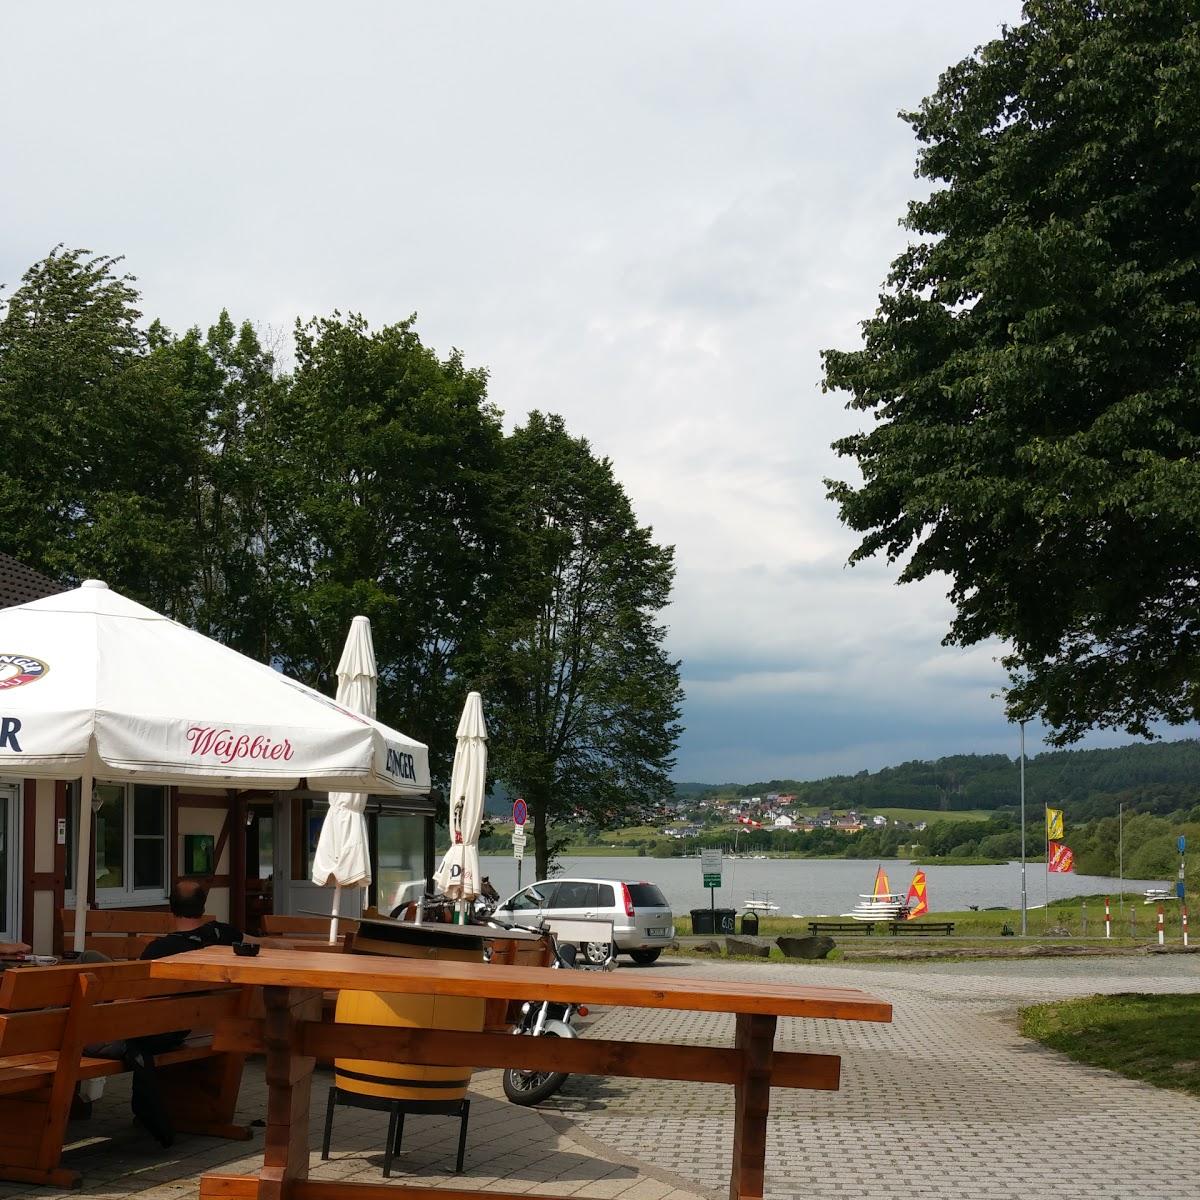 Restaurant "Aartalgrill am See" in  Hohenahr